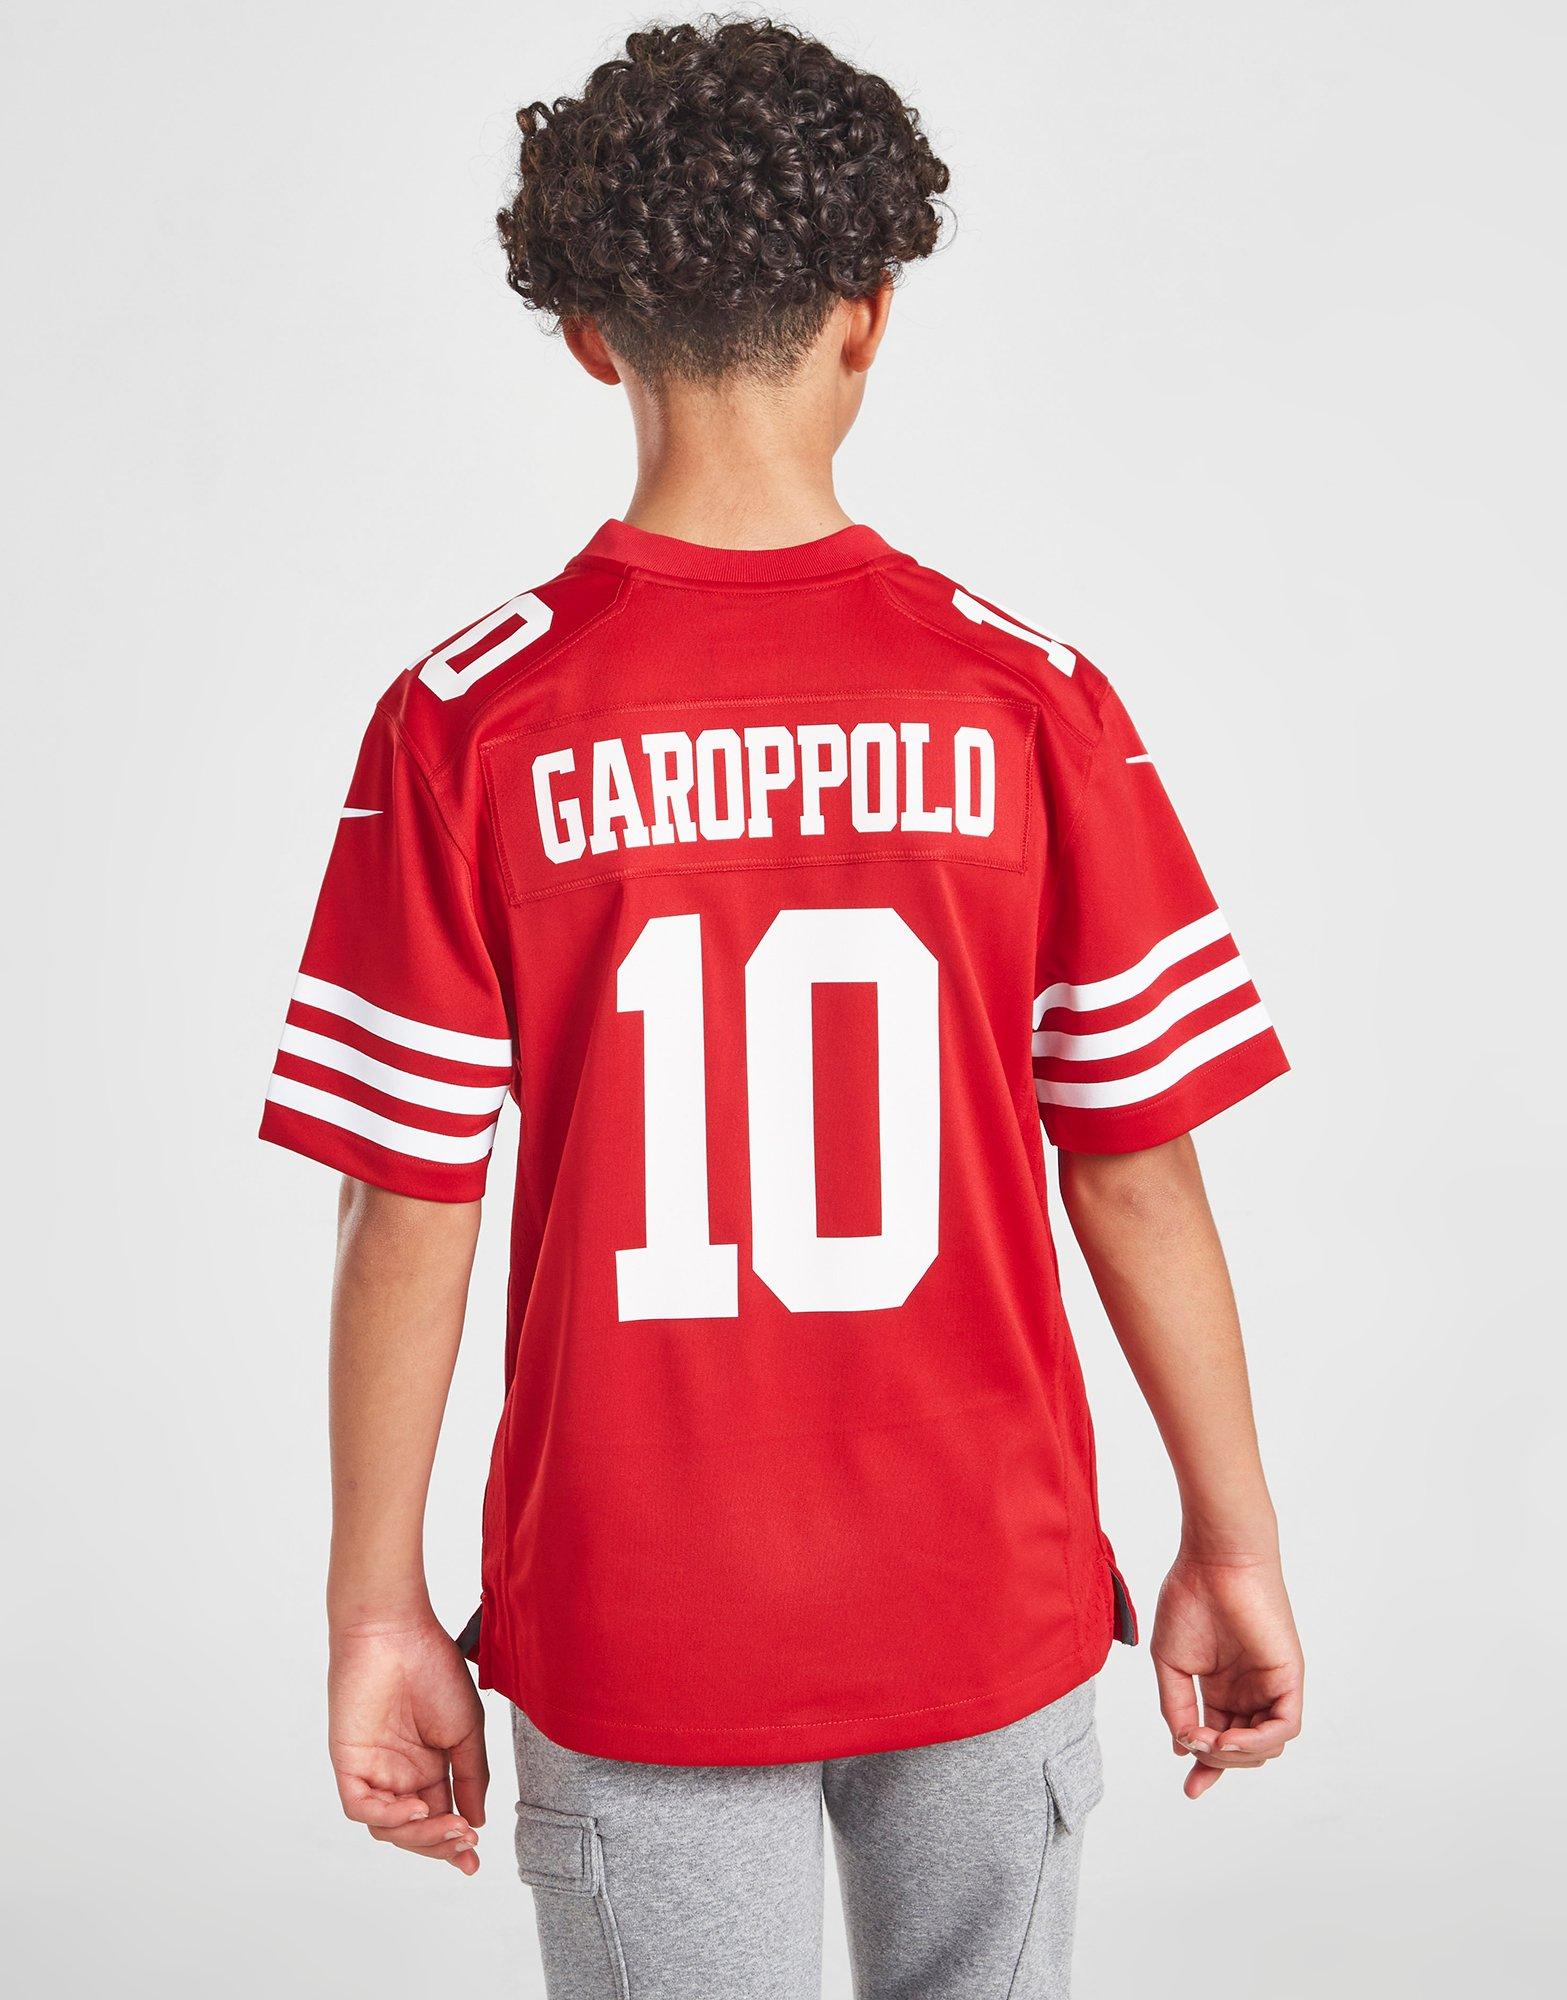 Red Nike NFL San Francisco 49ers Garoppolo #10 Jersey - JD Sports Ireland